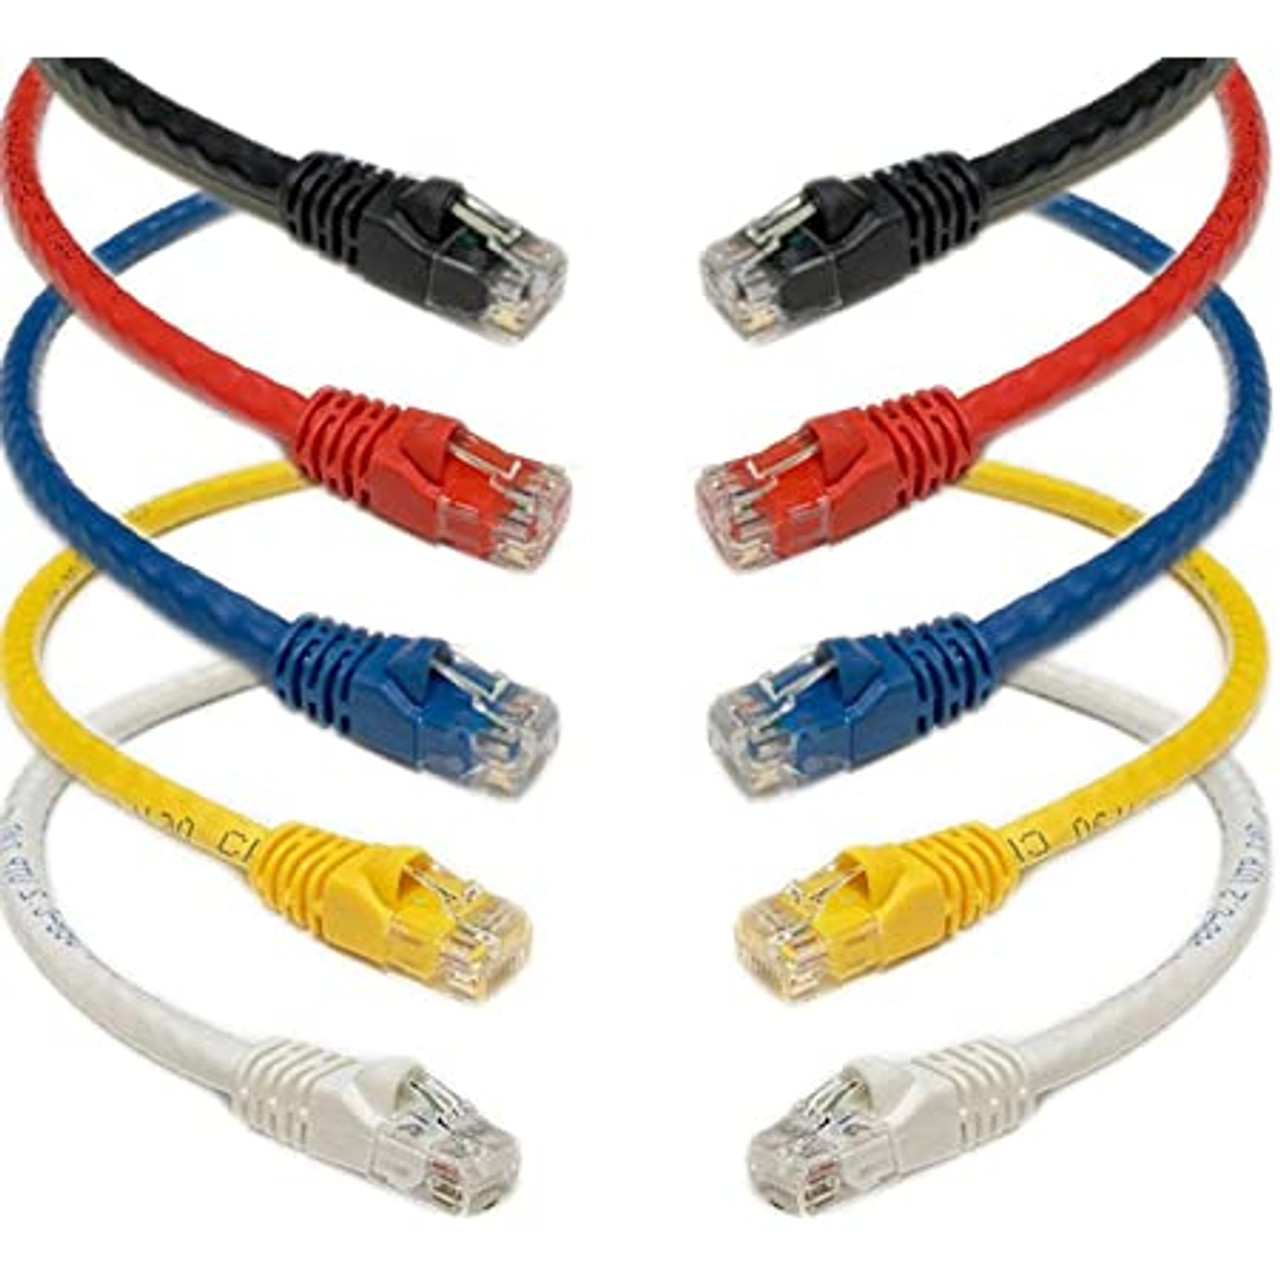 Belkin - Network cable - bare wire - bare wire - 1000 ft ( CAT 5e )